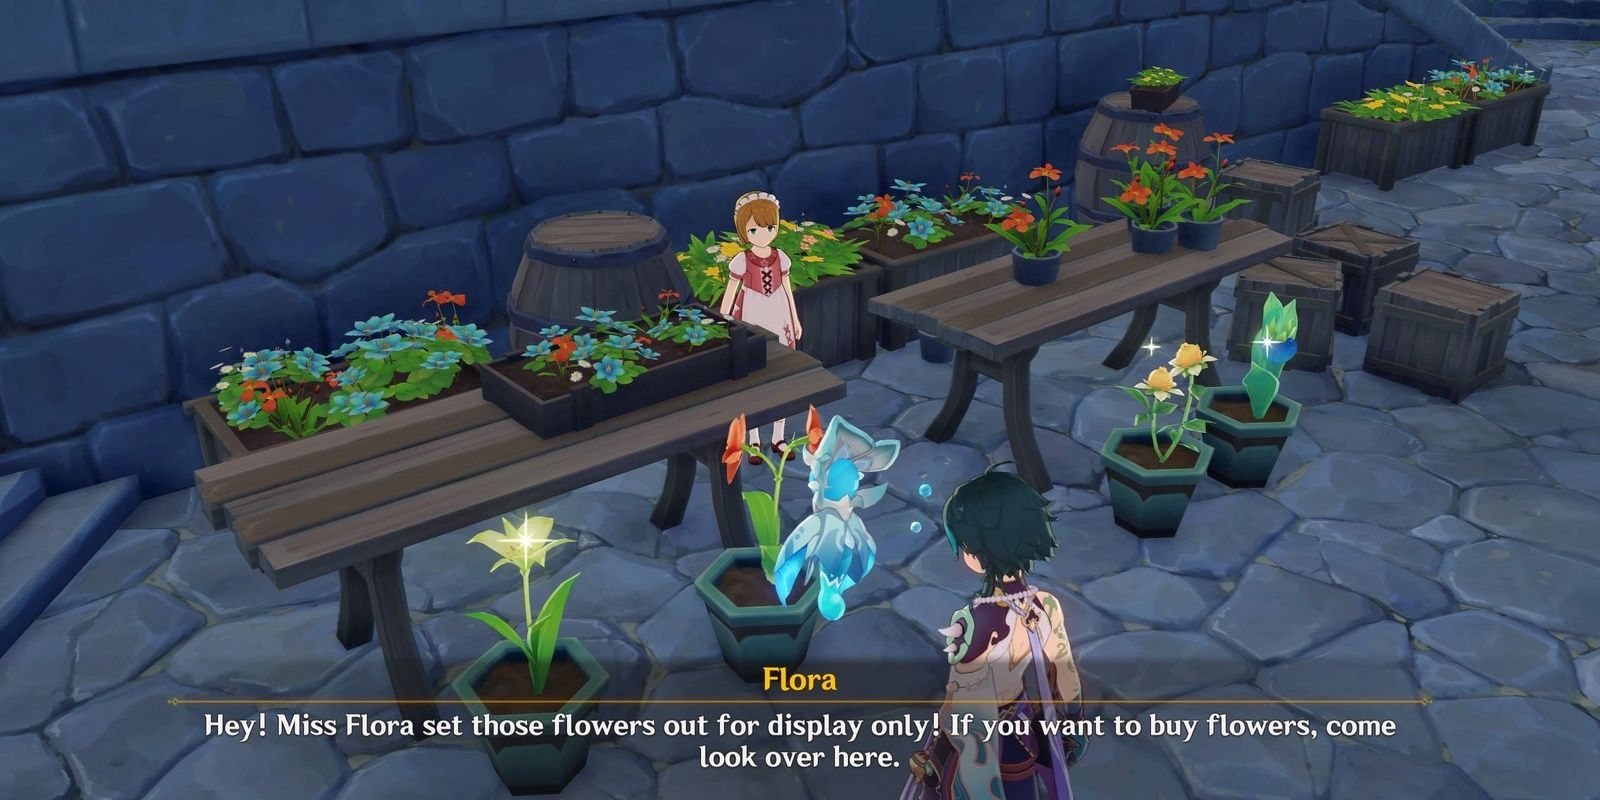 Talking to Flora in game